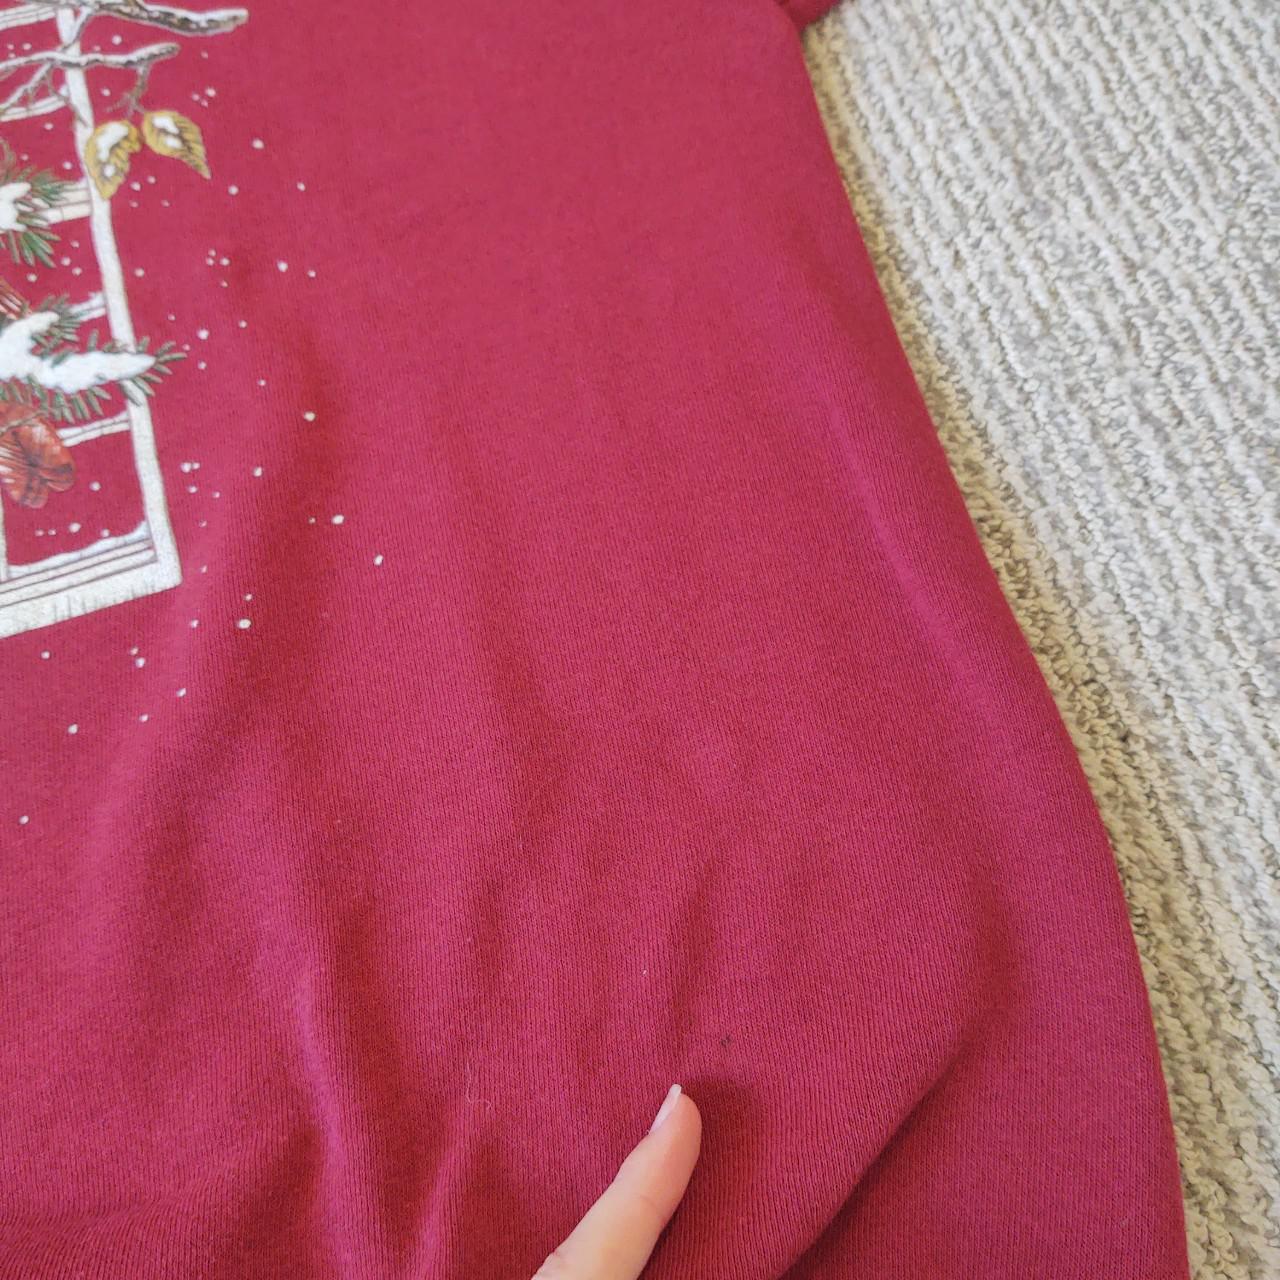 Product Image 3 - Burgundy red cardinal winter sweatshirt,